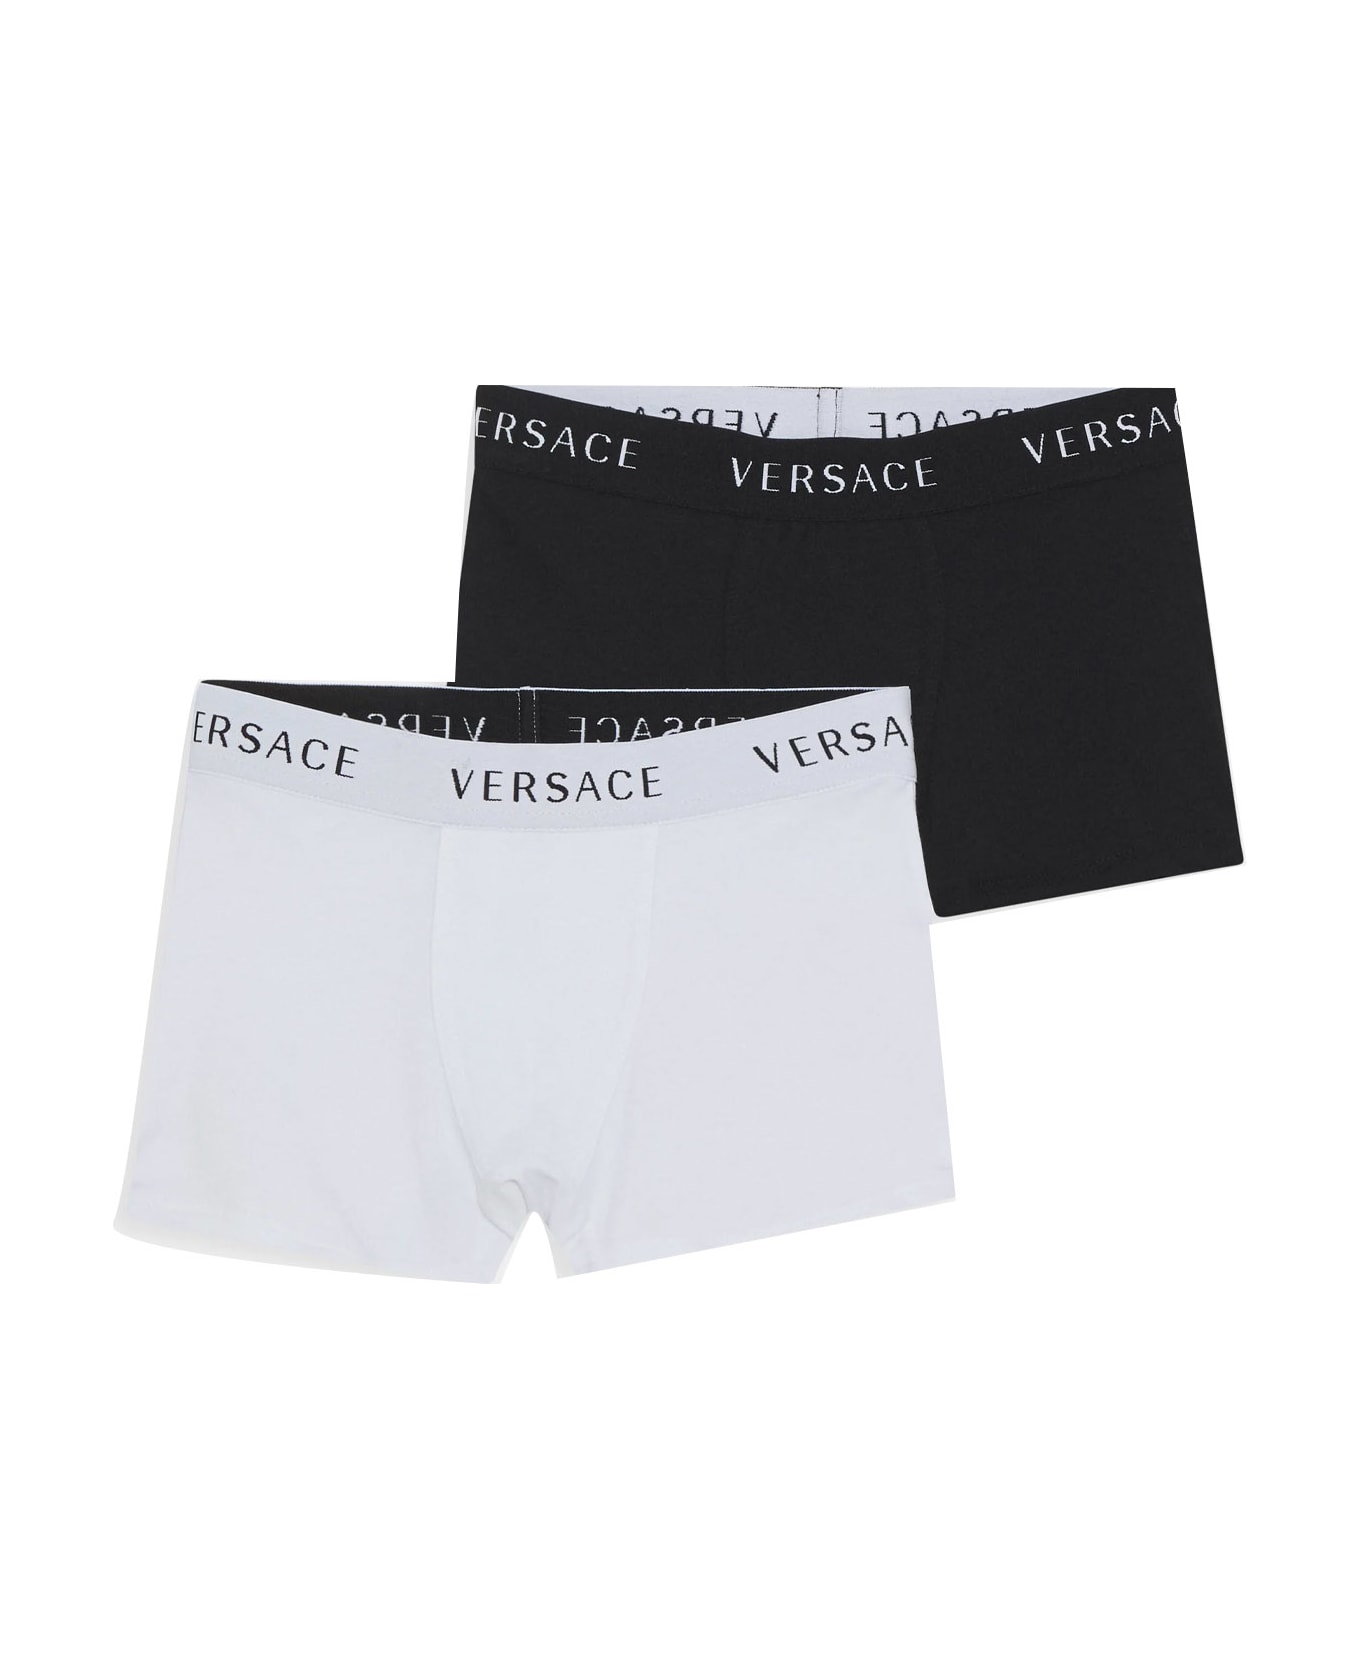 Versace Pack Of 2 Cotton Boxer Briefs - Multicolor アンダーウェア